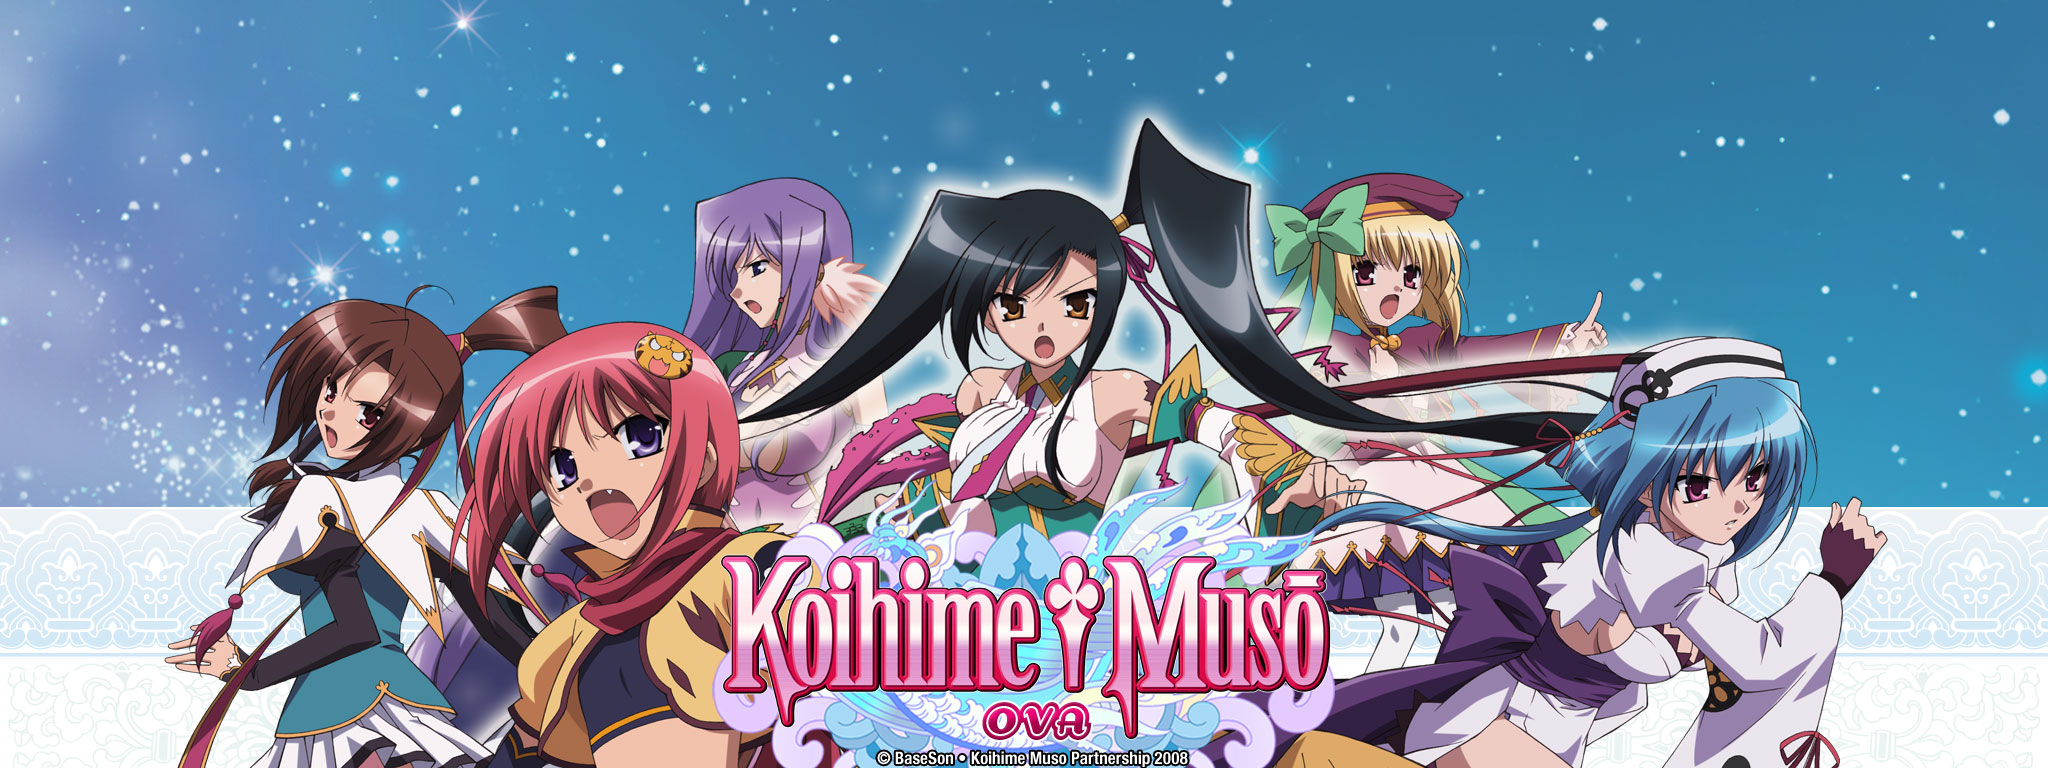 Title Art for Koihime Muso OVA